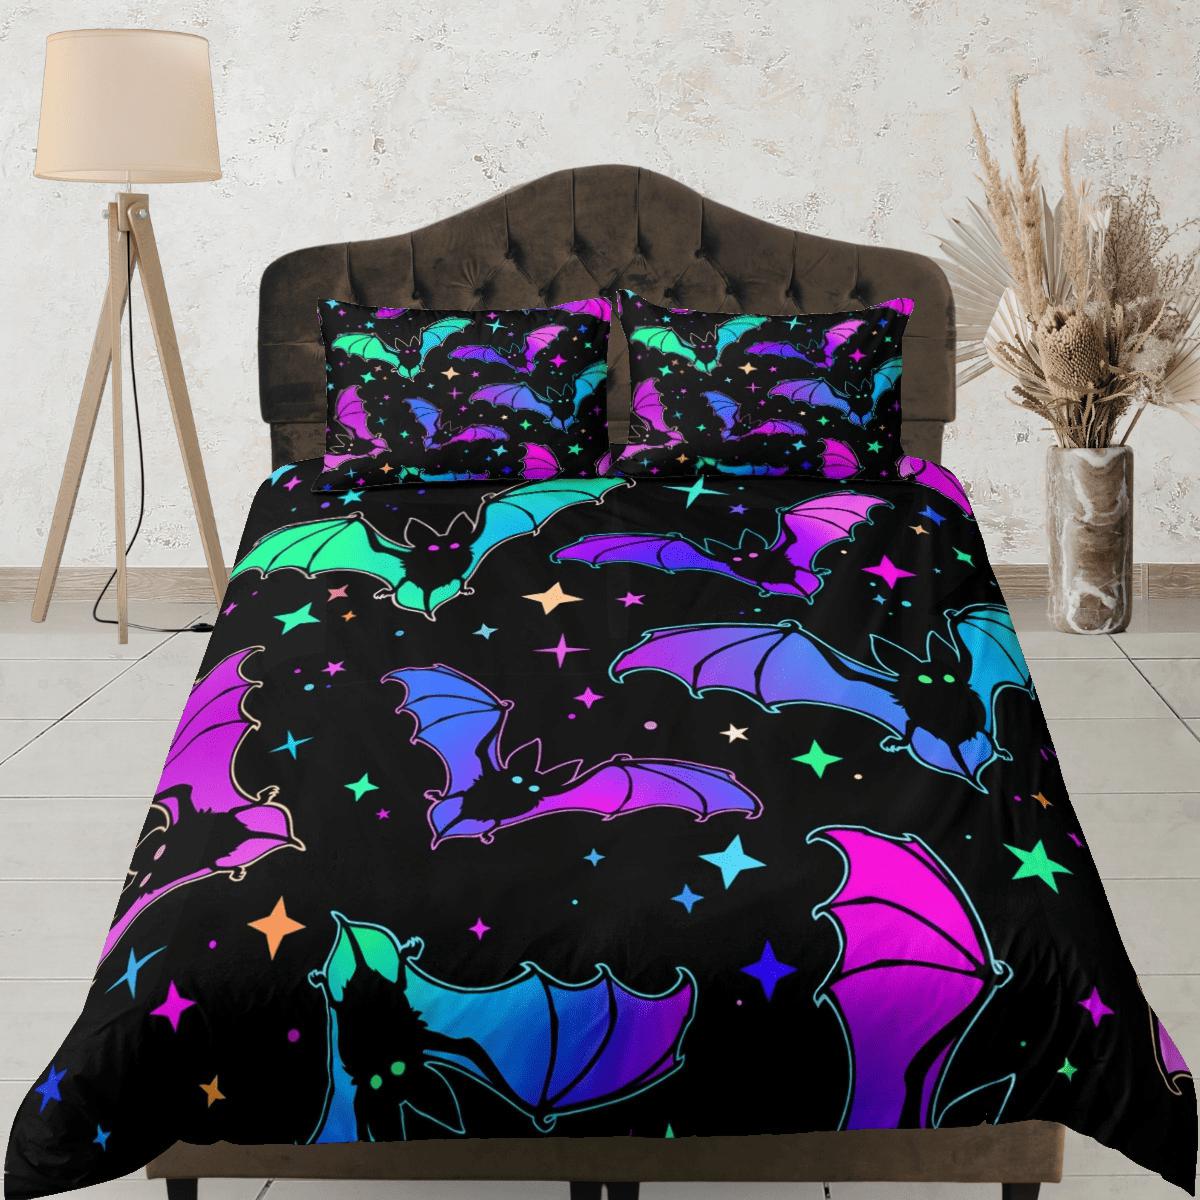 daintyduvet Retro stars and bats 90s neon halloween bedding hippie duvet cover, colorful dorm bedding, teens bedroom, adult duvet, toddler bedding